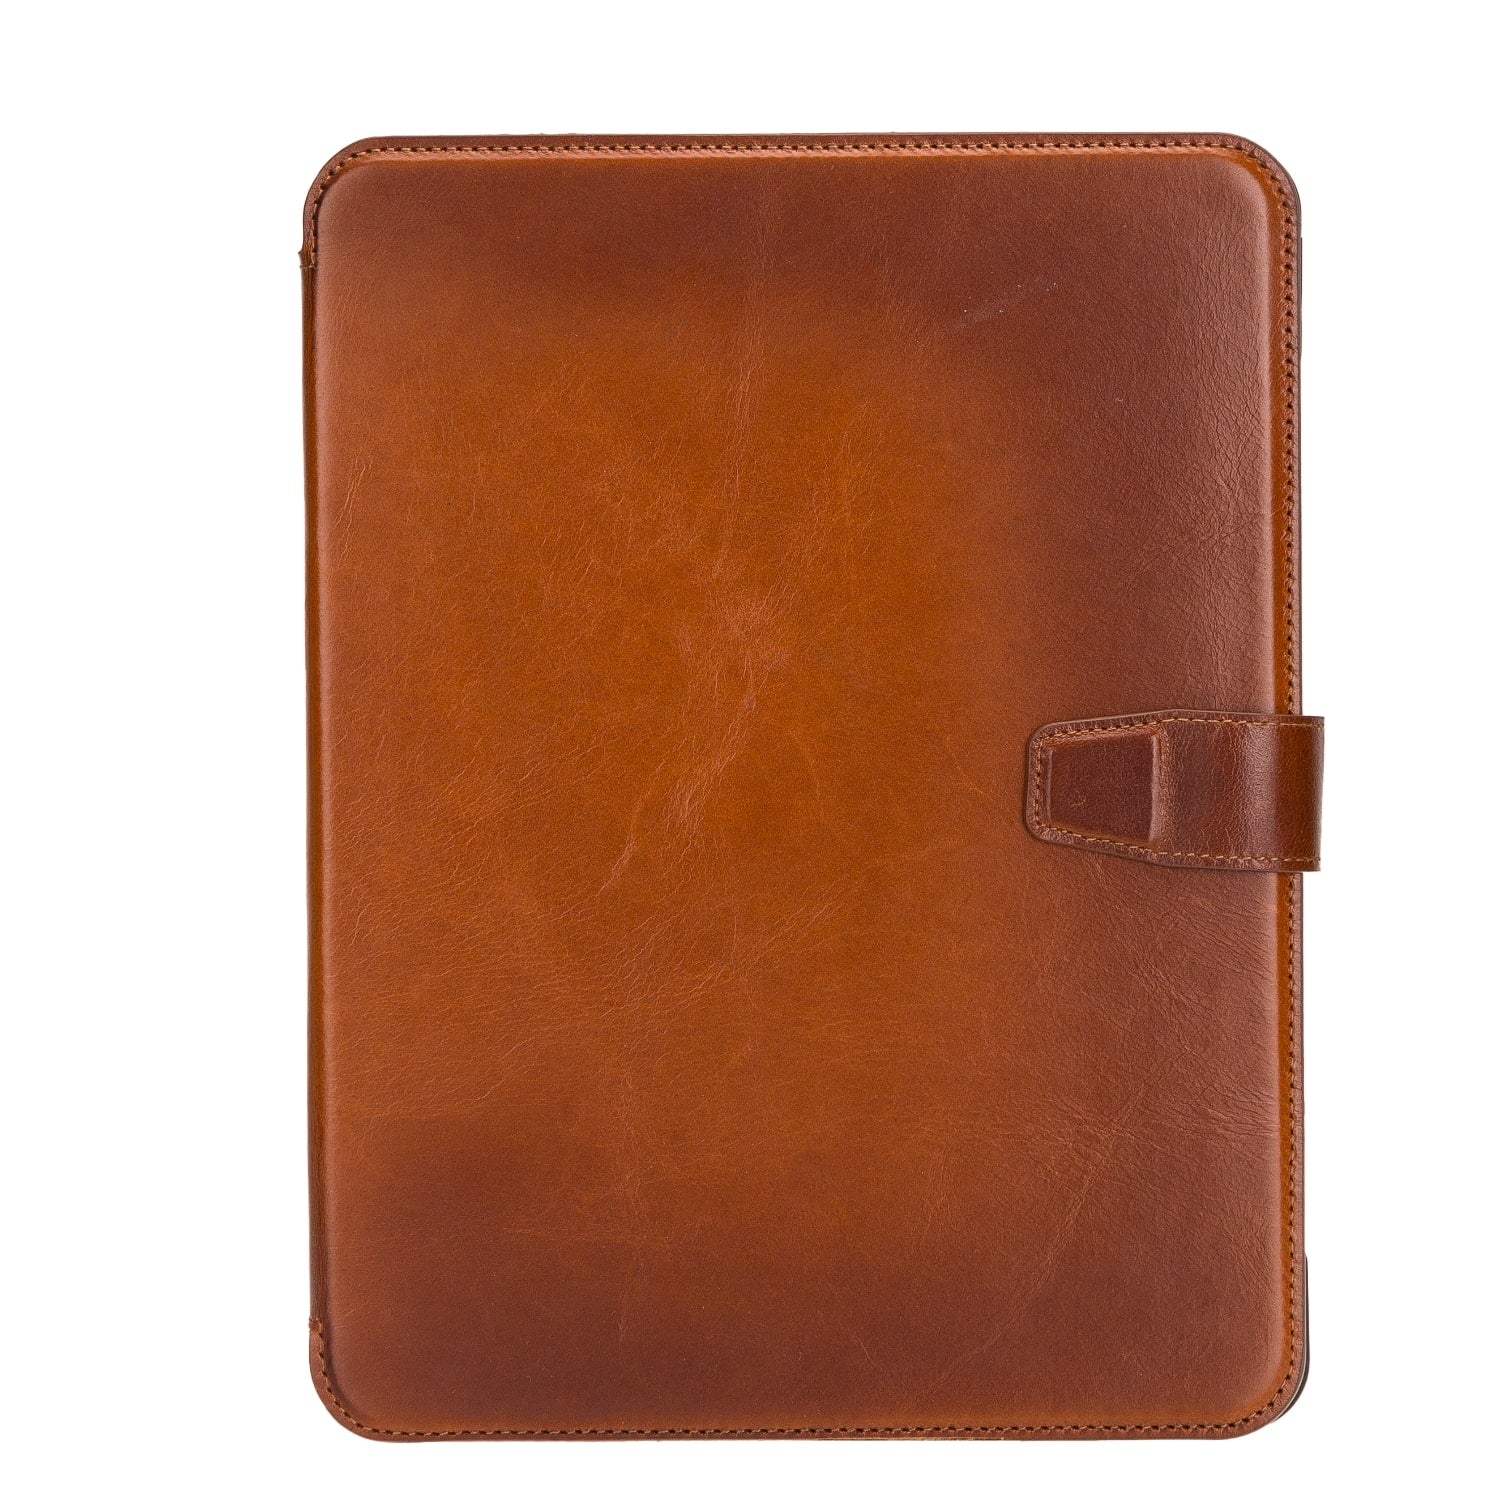 Brown Leather iPad Air 10.9 Inc Smart Folio Case with Apple Pen Holder - Bomonti - 3